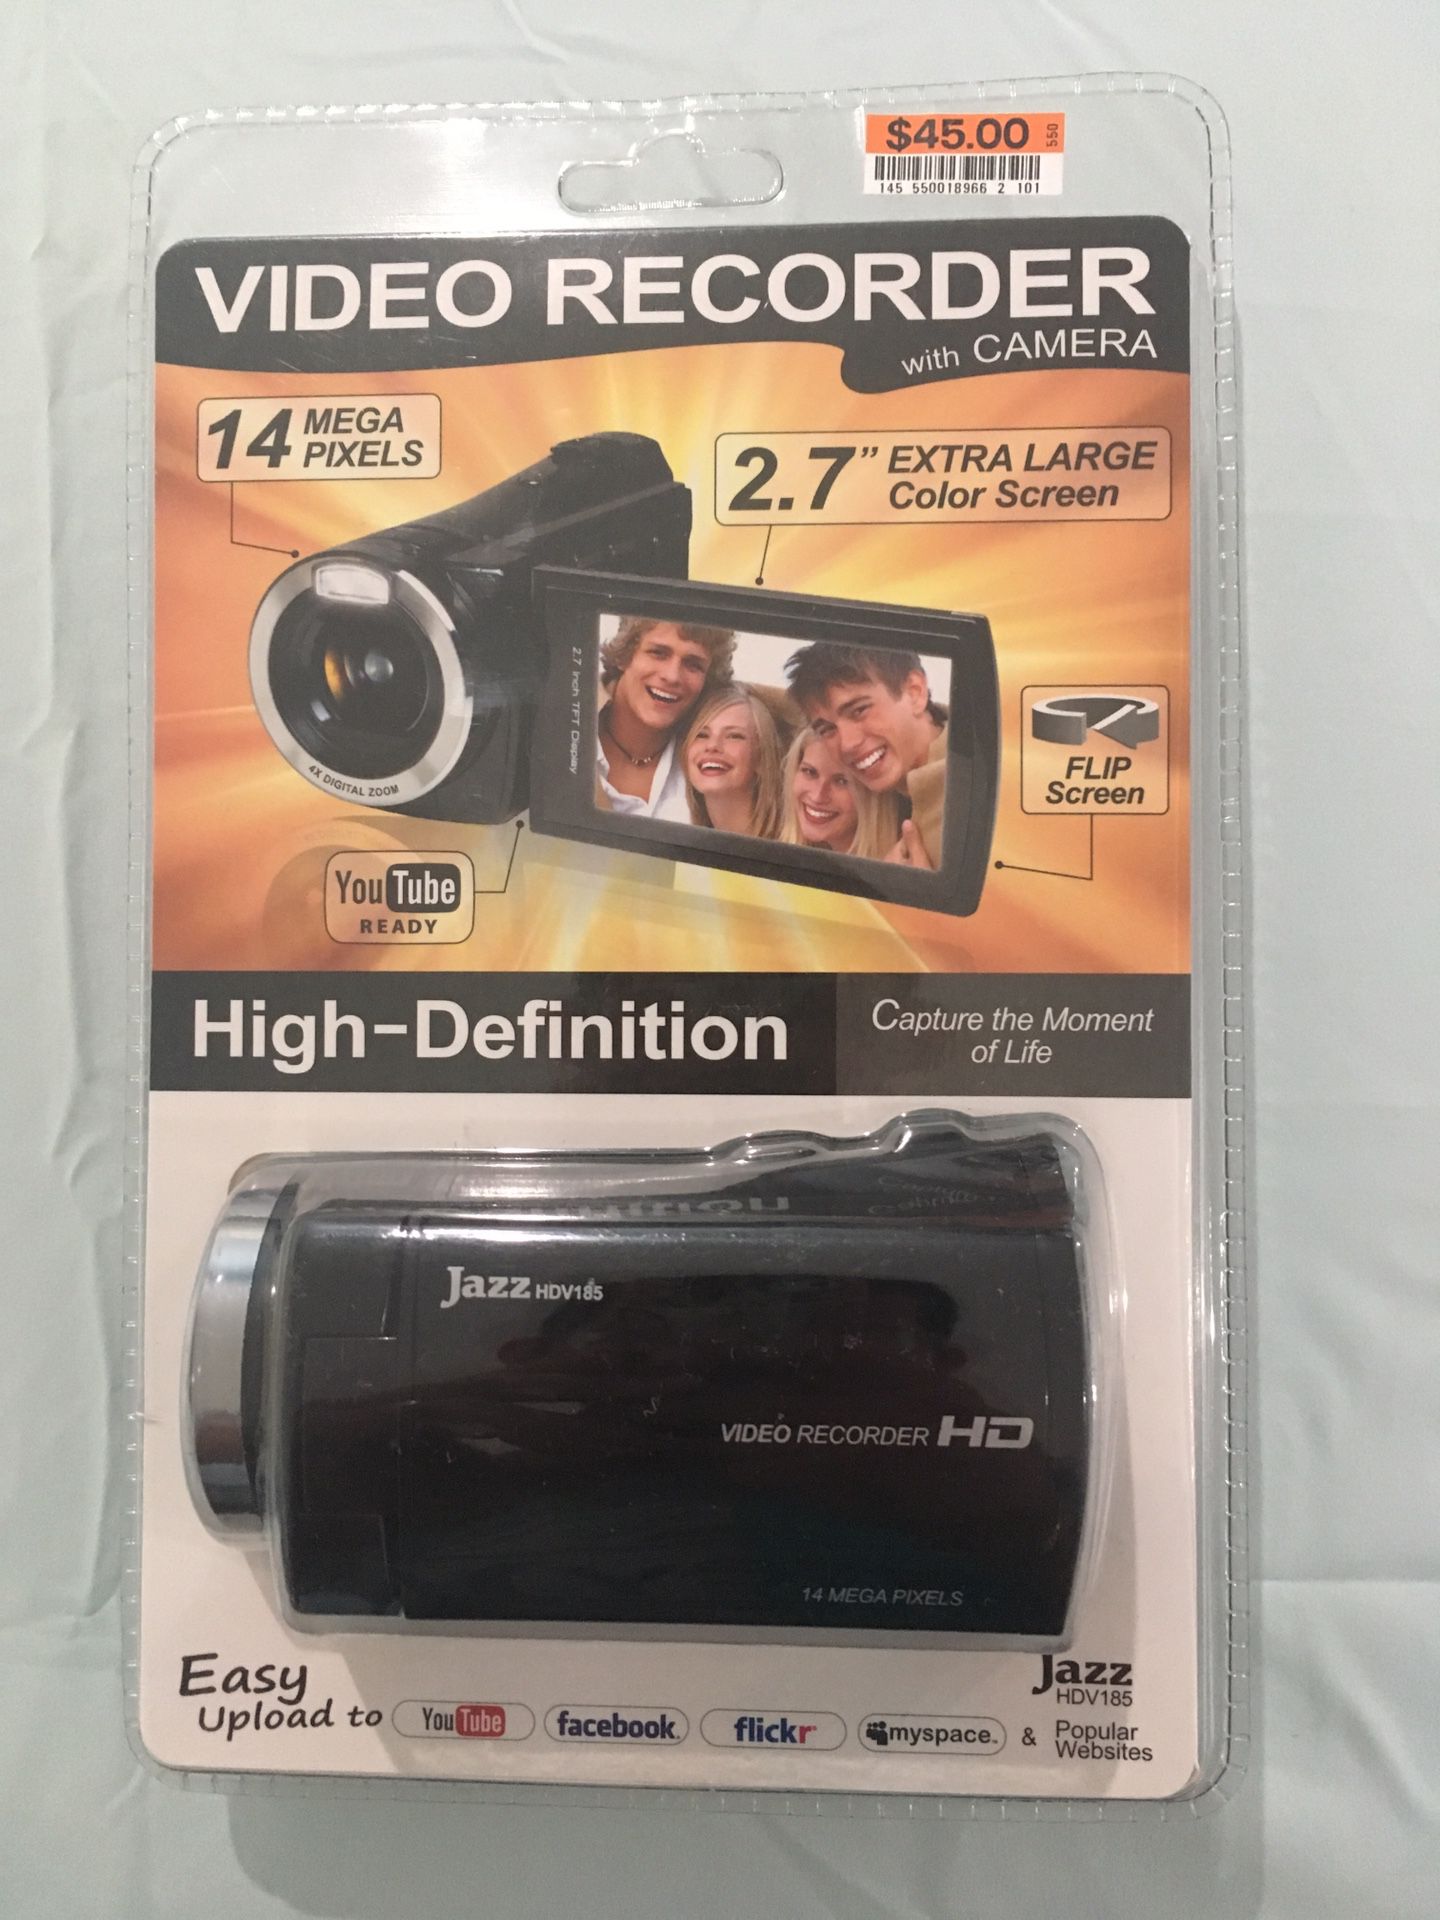 Jazz HDV185 HD Video Recorder